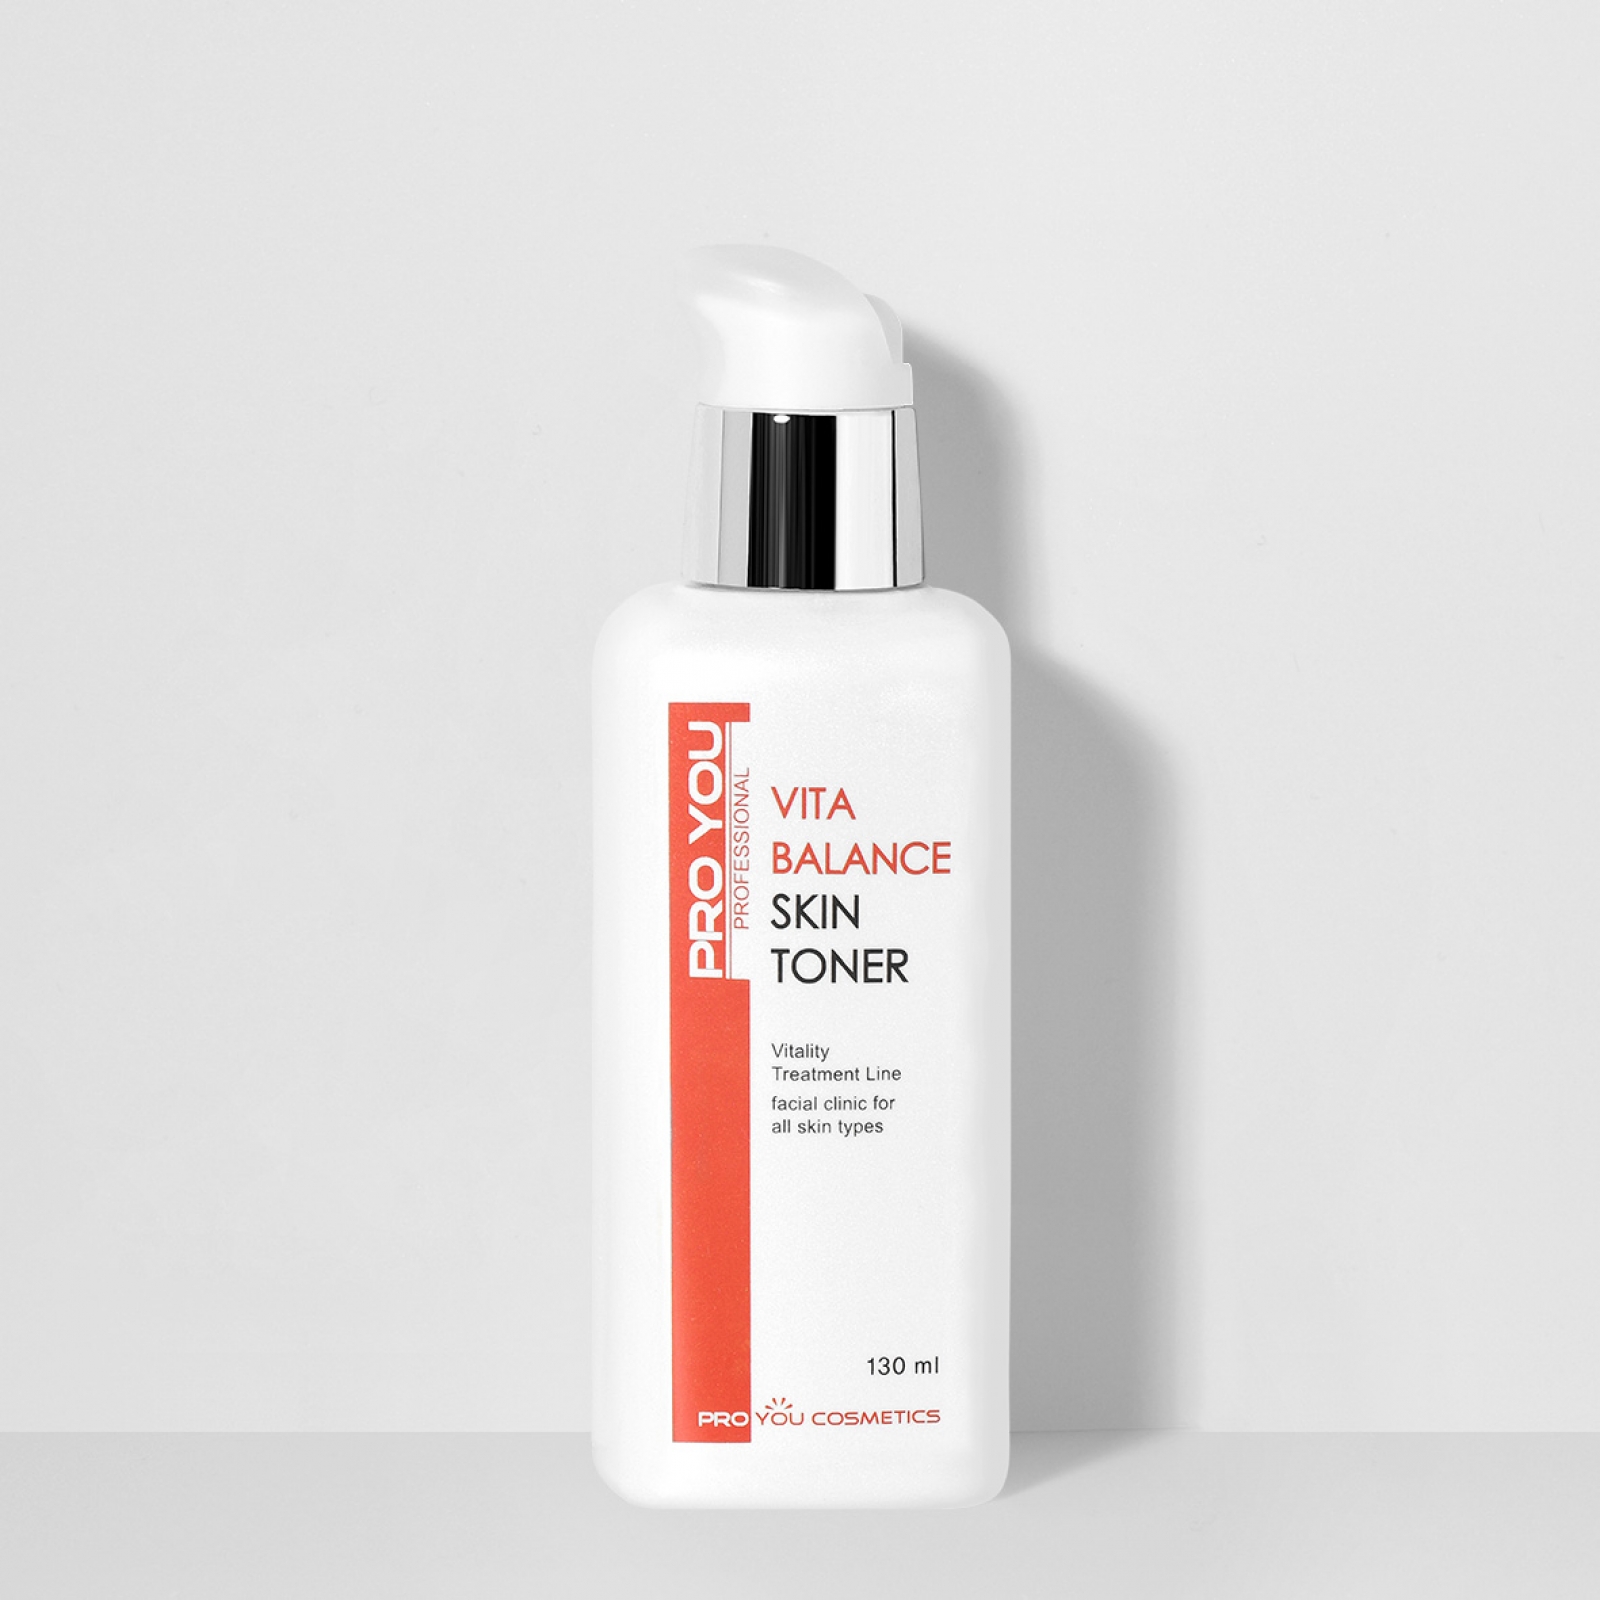 Тонер для обезвоженной кожи лица с витаминами Vita Balance Skin Toner, 130 мл